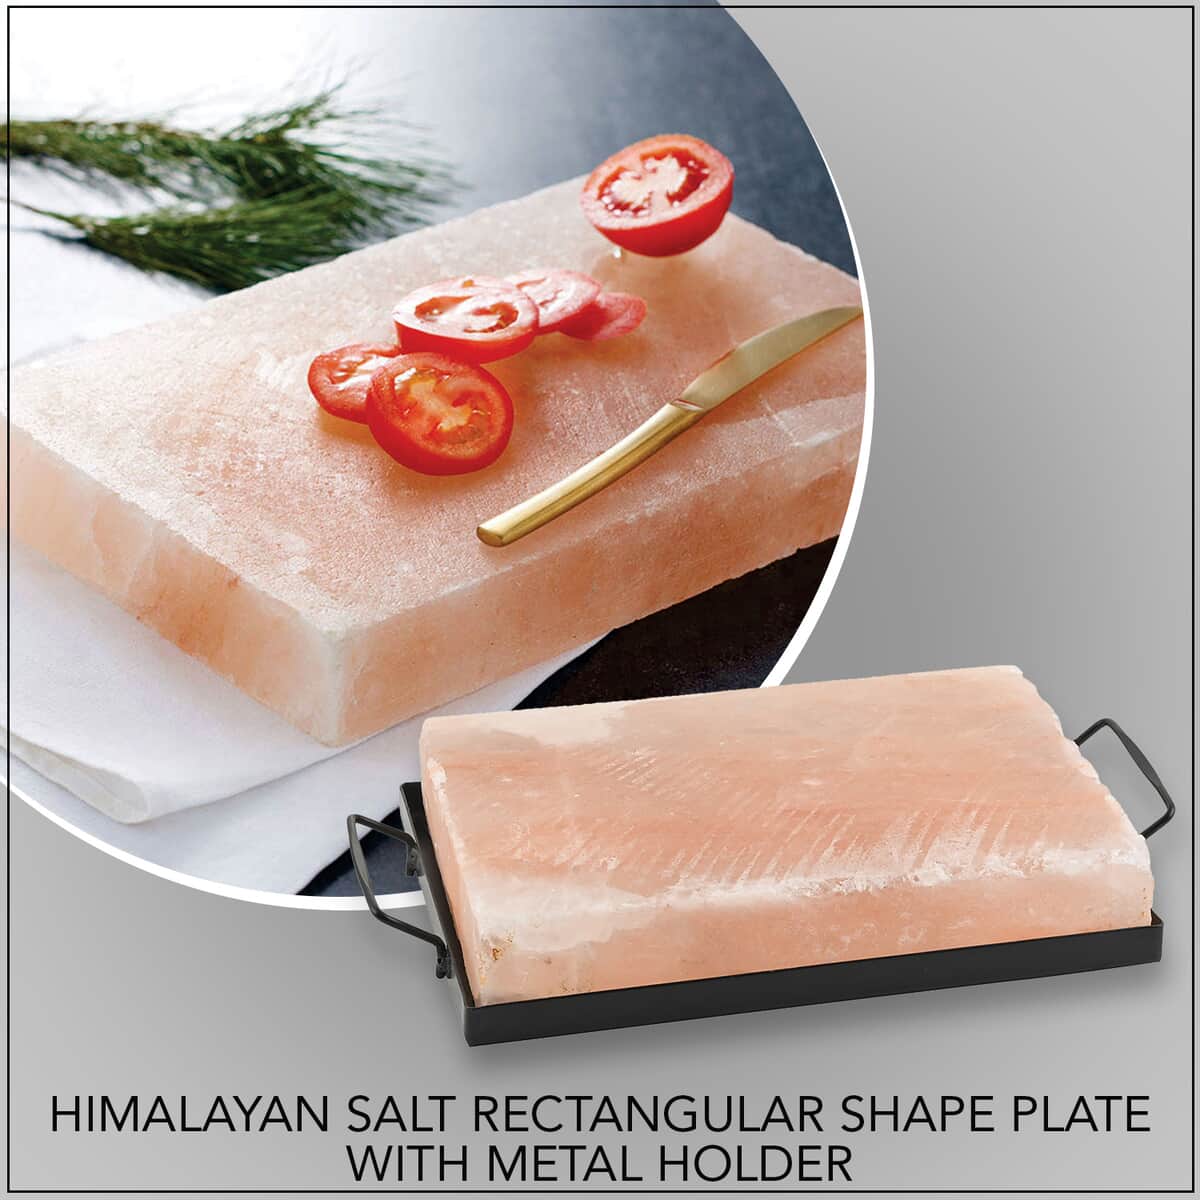 Himalayan Salt Rectangular Shape Plate with Metal Holder - 8.5 KG image number 1